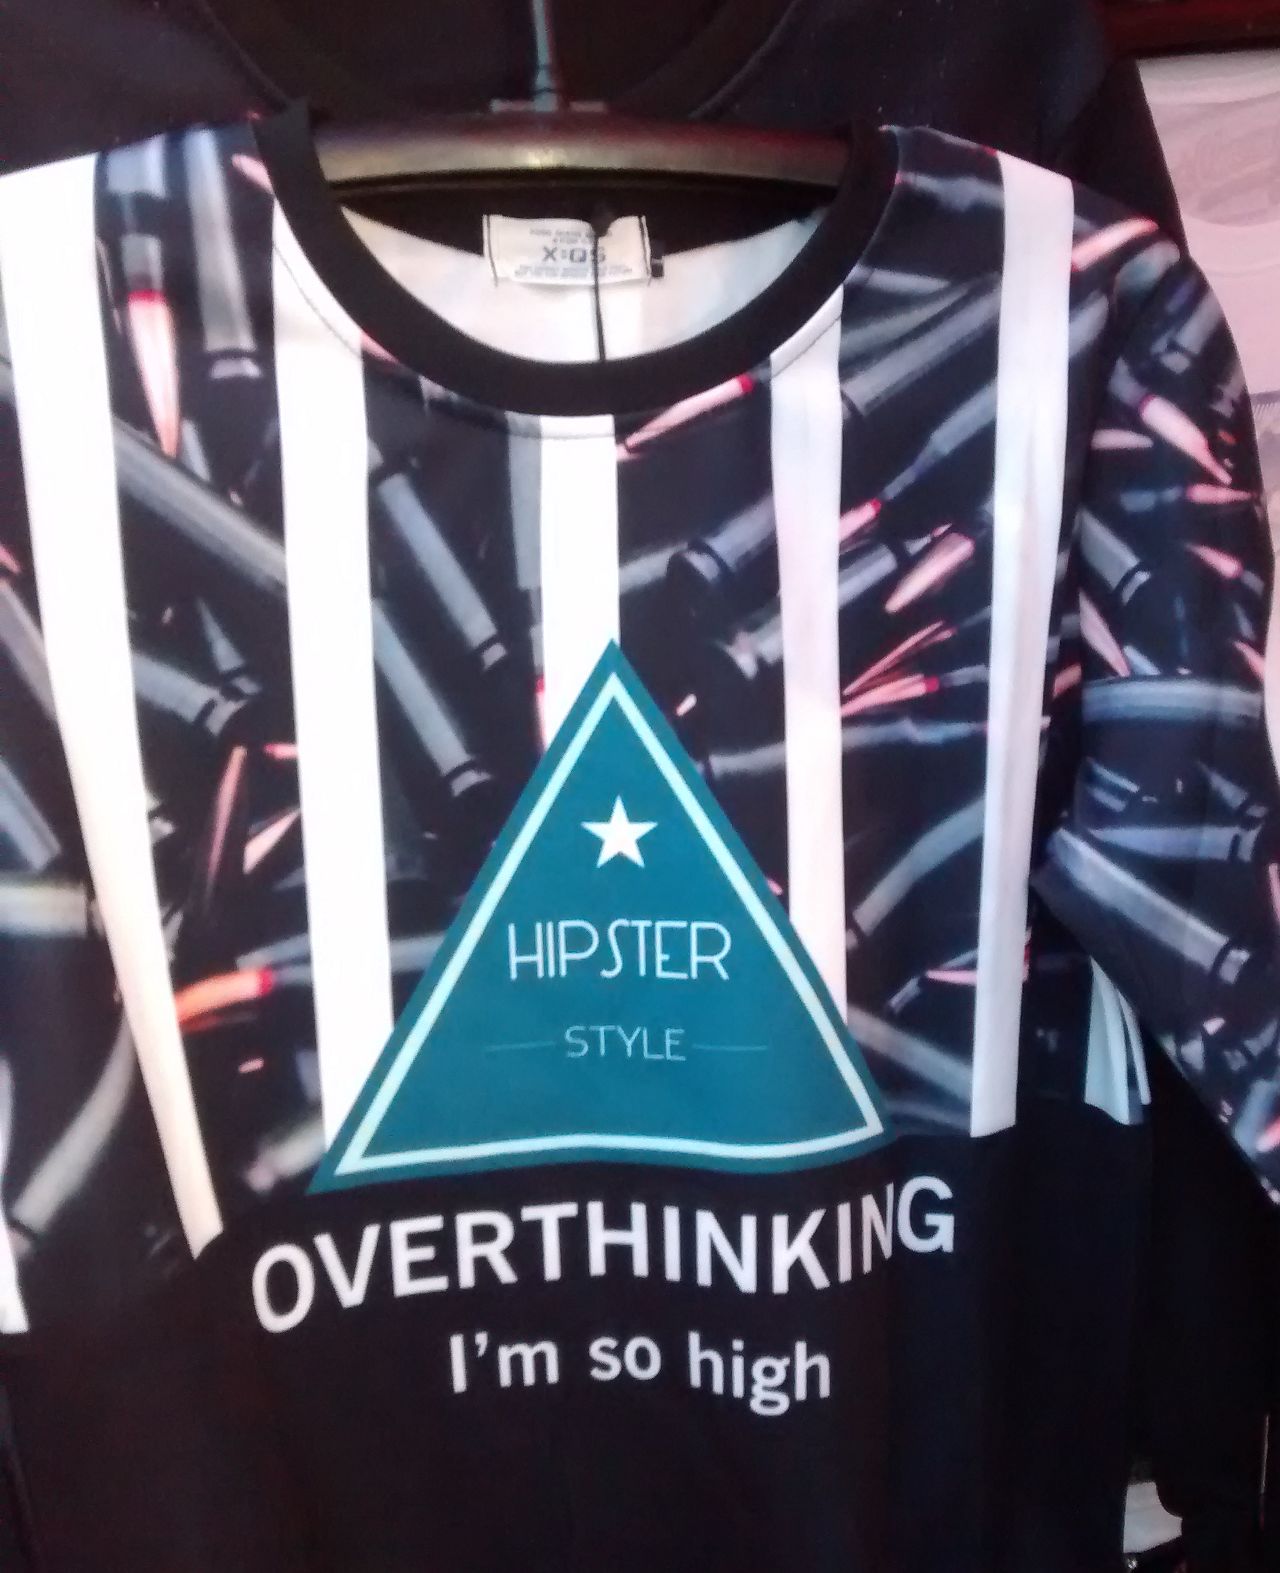 Hipster Style. Overthinking. I'm so high.